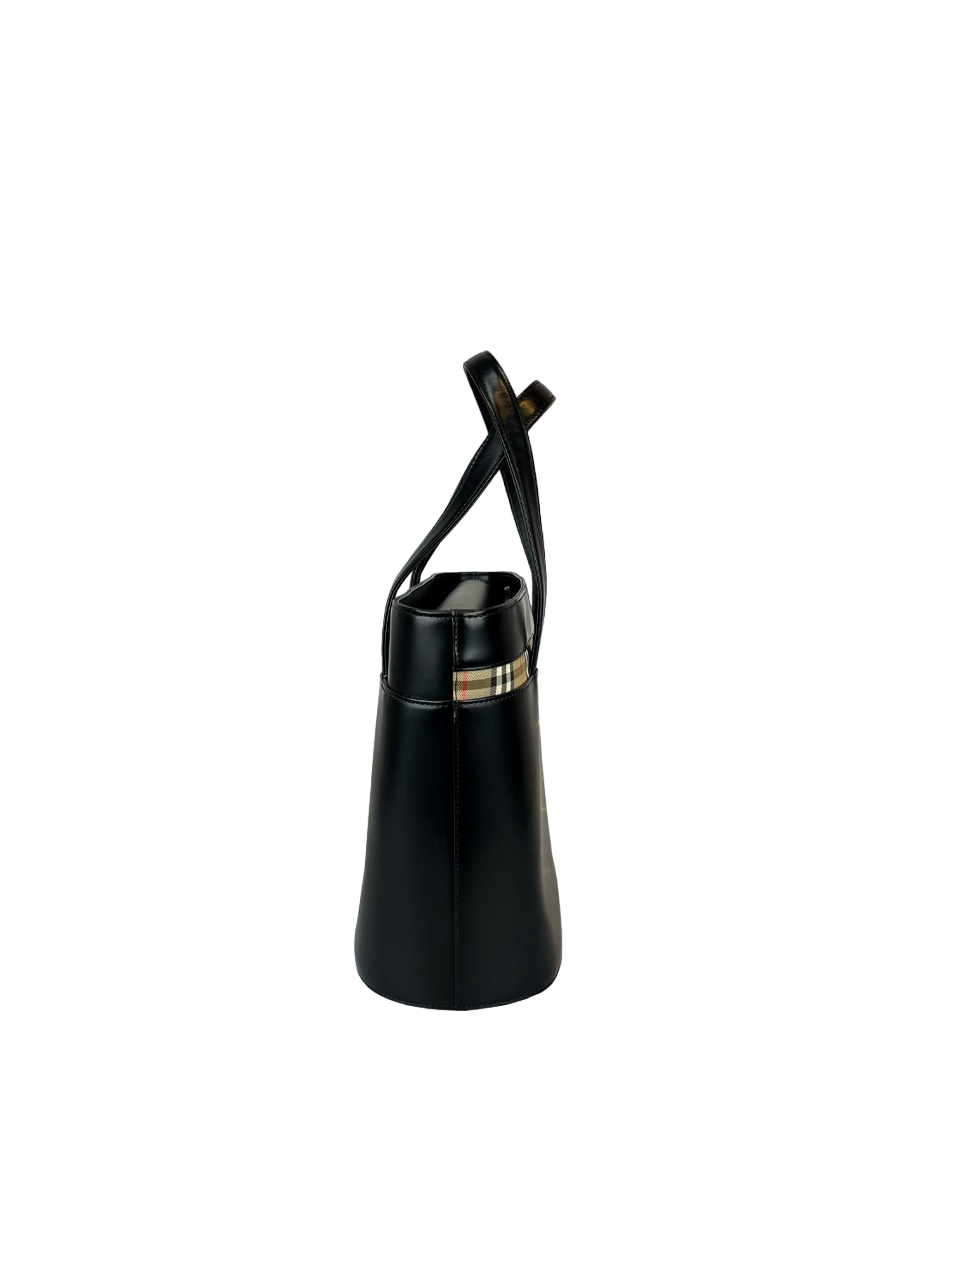 Burberry Black Leather Handbag